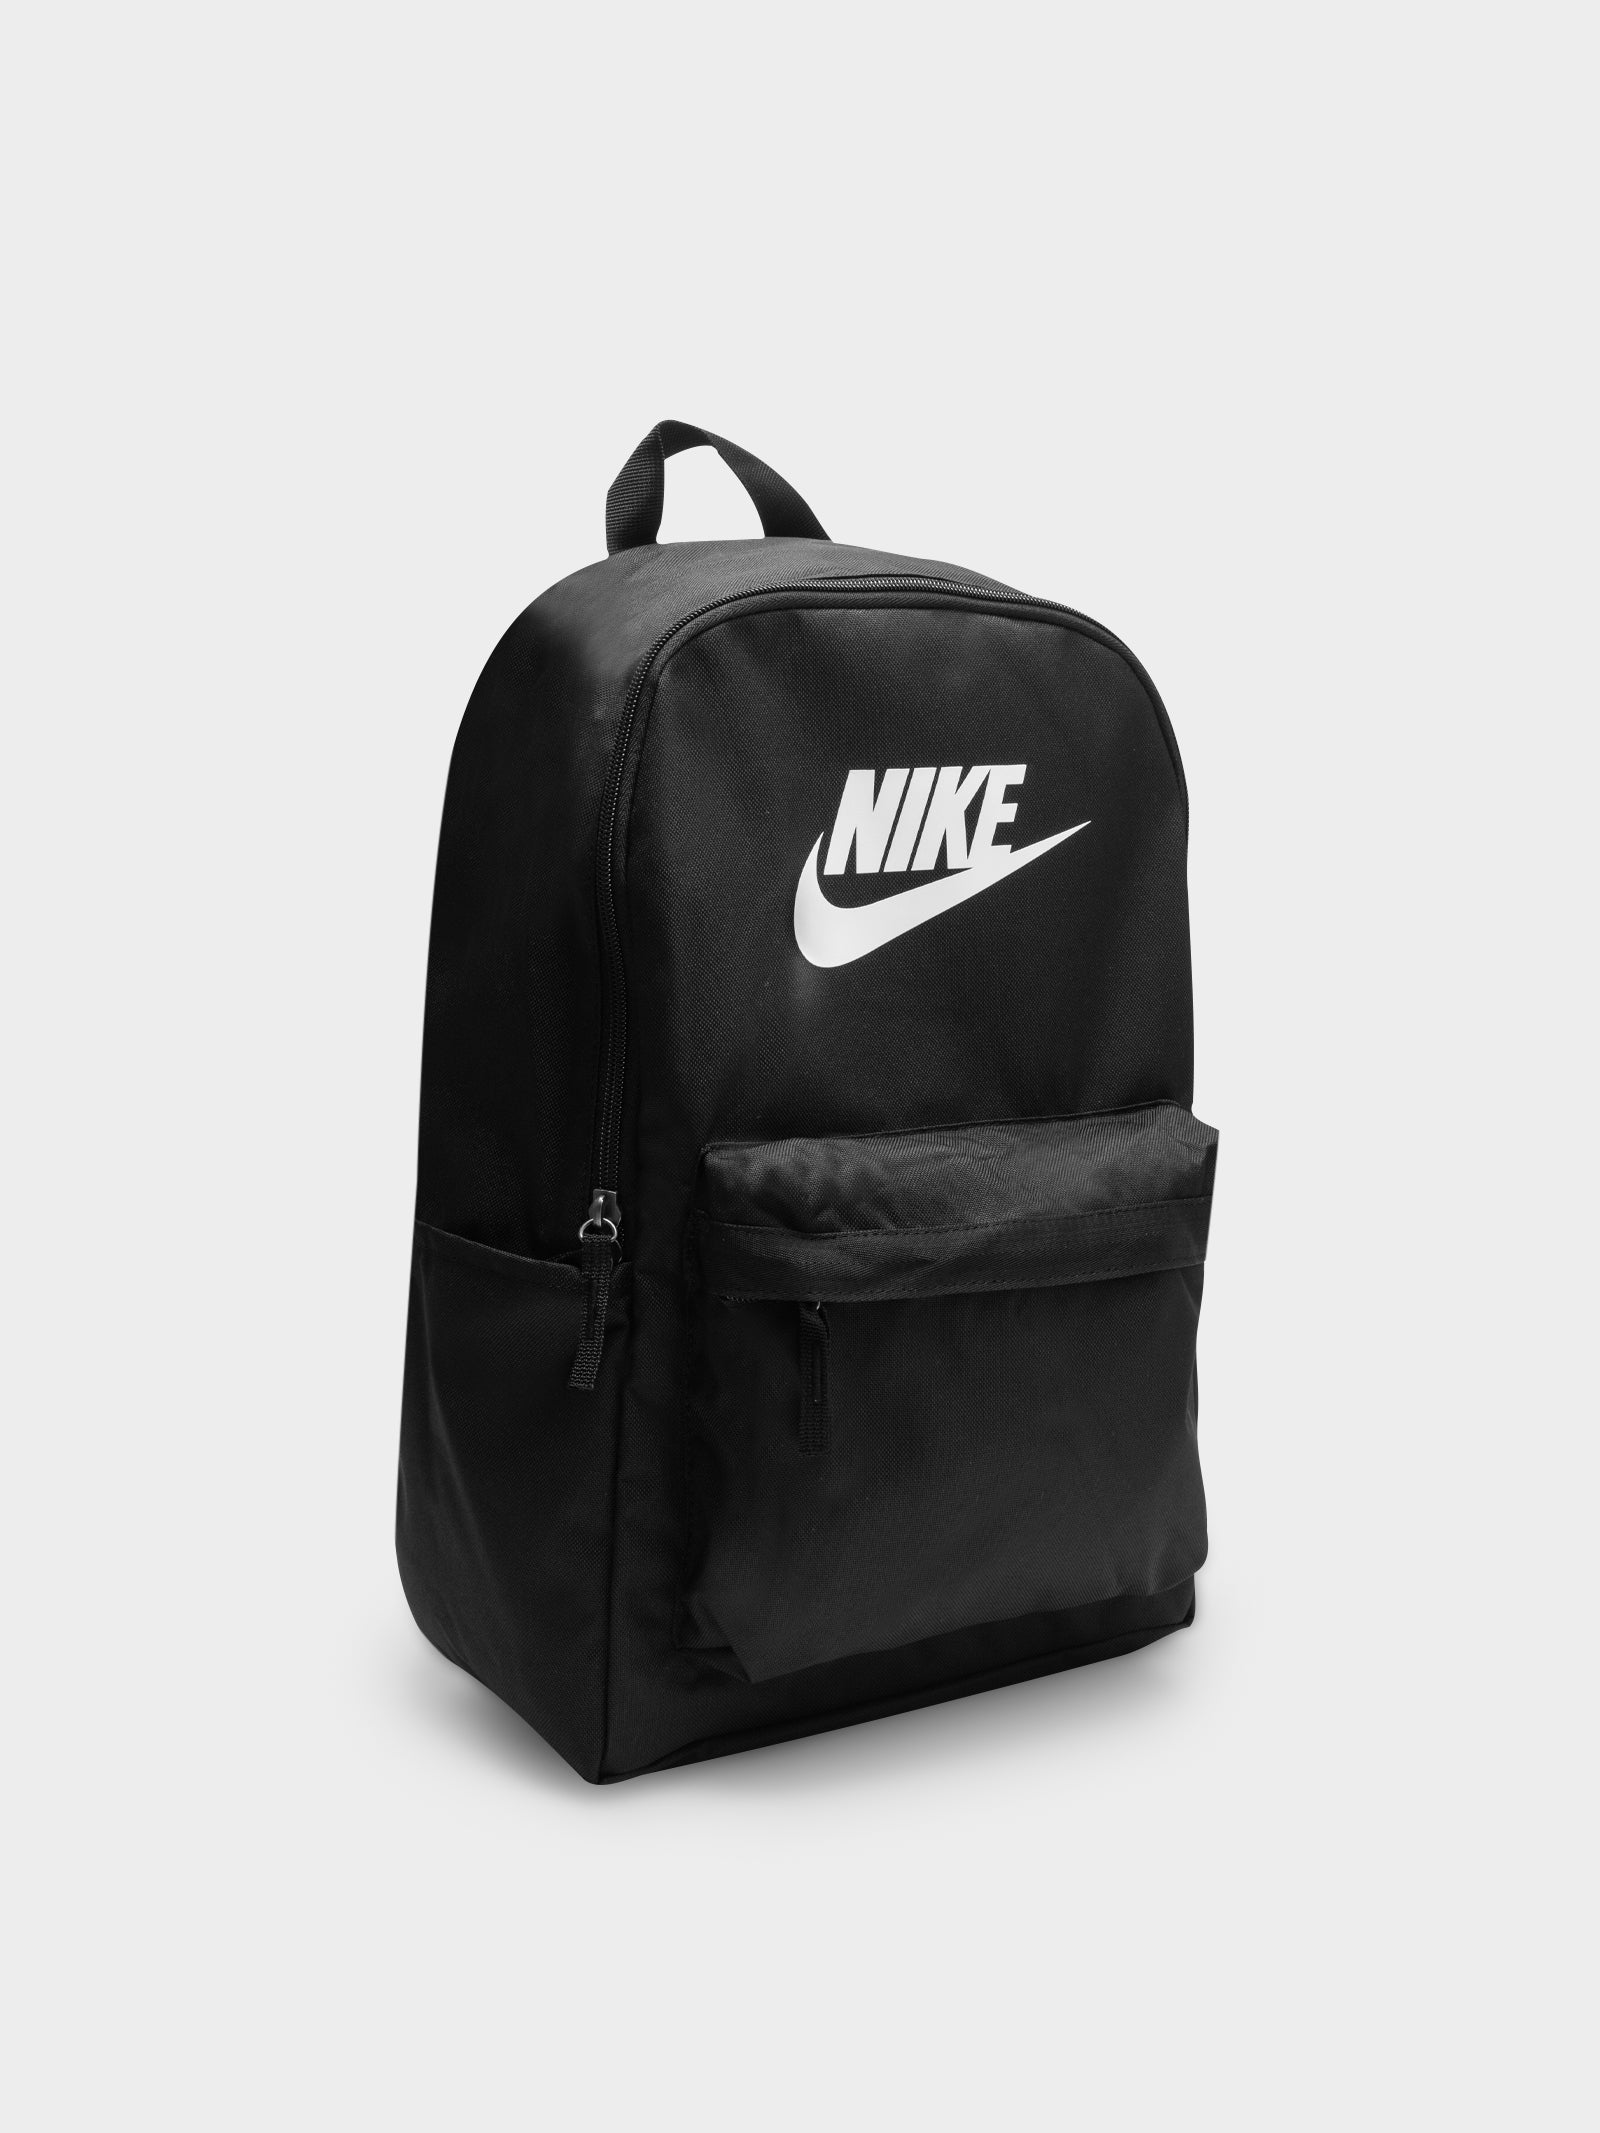 miseria Cuna violento Nike Heritage Backpack in Black & White - Glue Store